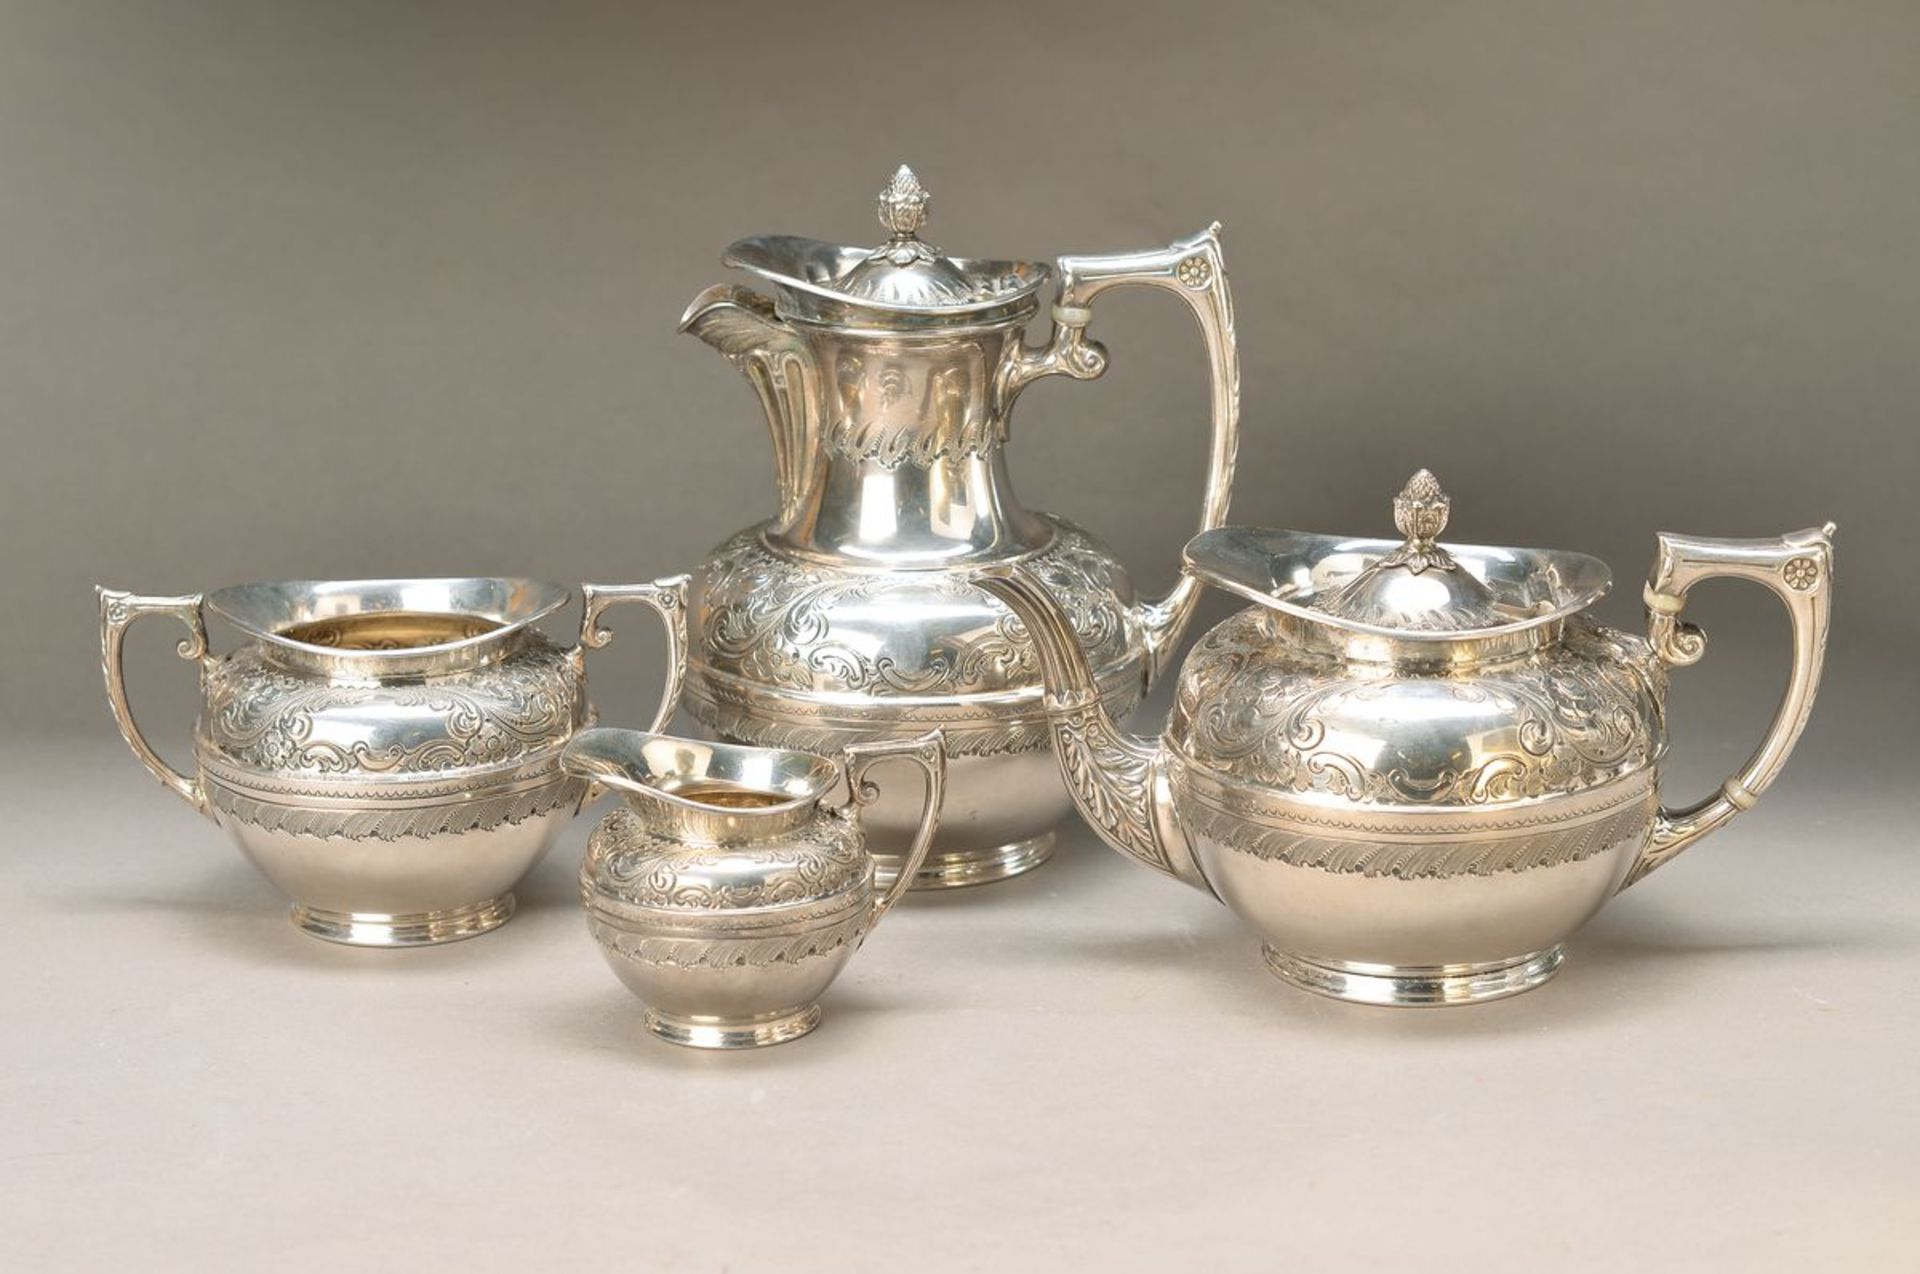 Kleines Kaffee- und Teeset, England, um 1880/90, silver plated, Kaffeekanne, Teekanne,